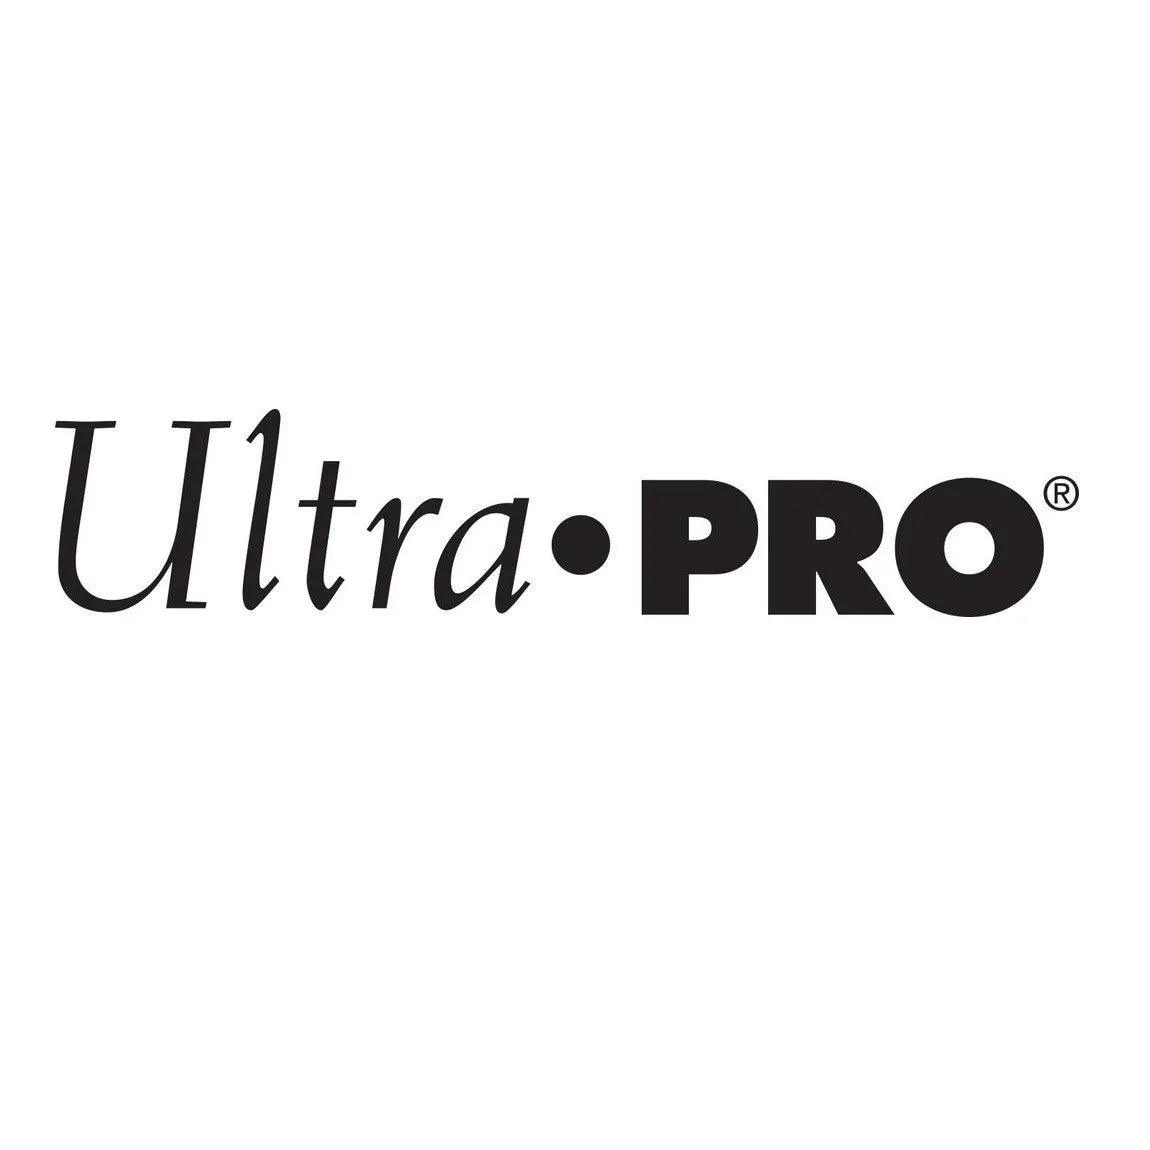 Ultra PRO - Album/Binder/Portfolio - 3" Hockey (Blue Color) - Hobby Champion Inc